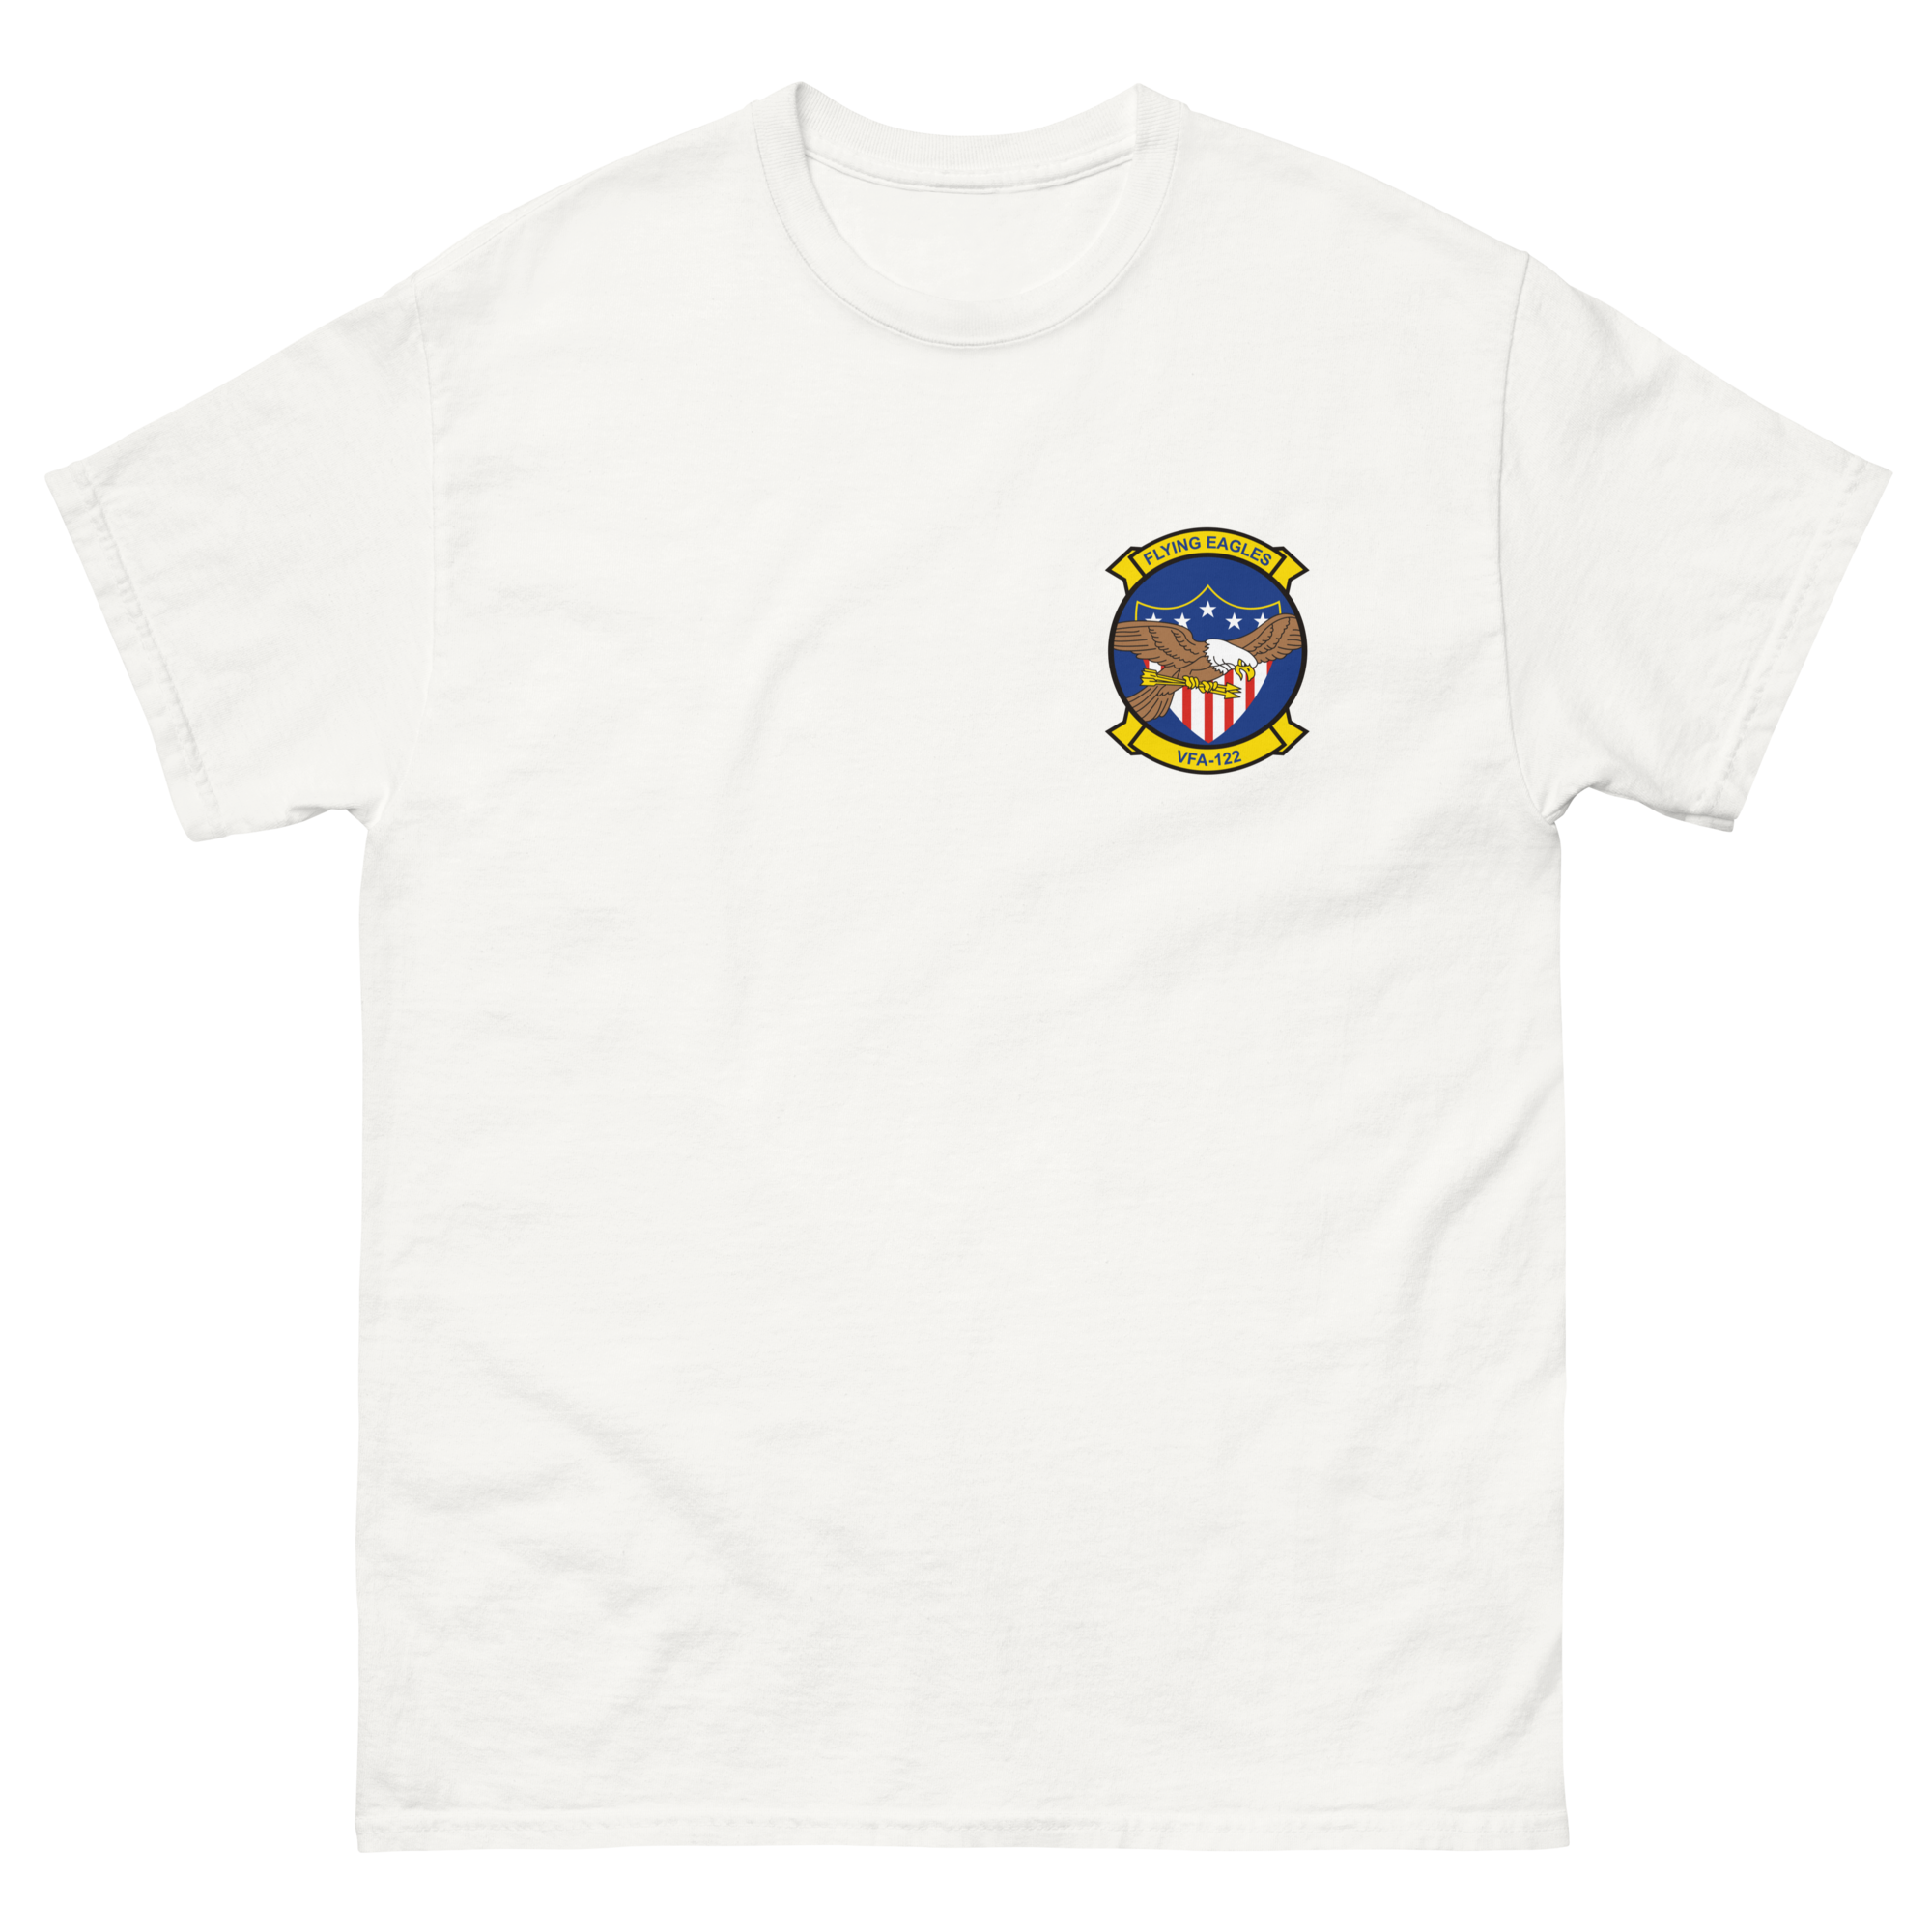 VFA-122 Flying Eagles Squadron Crest T-Shirt